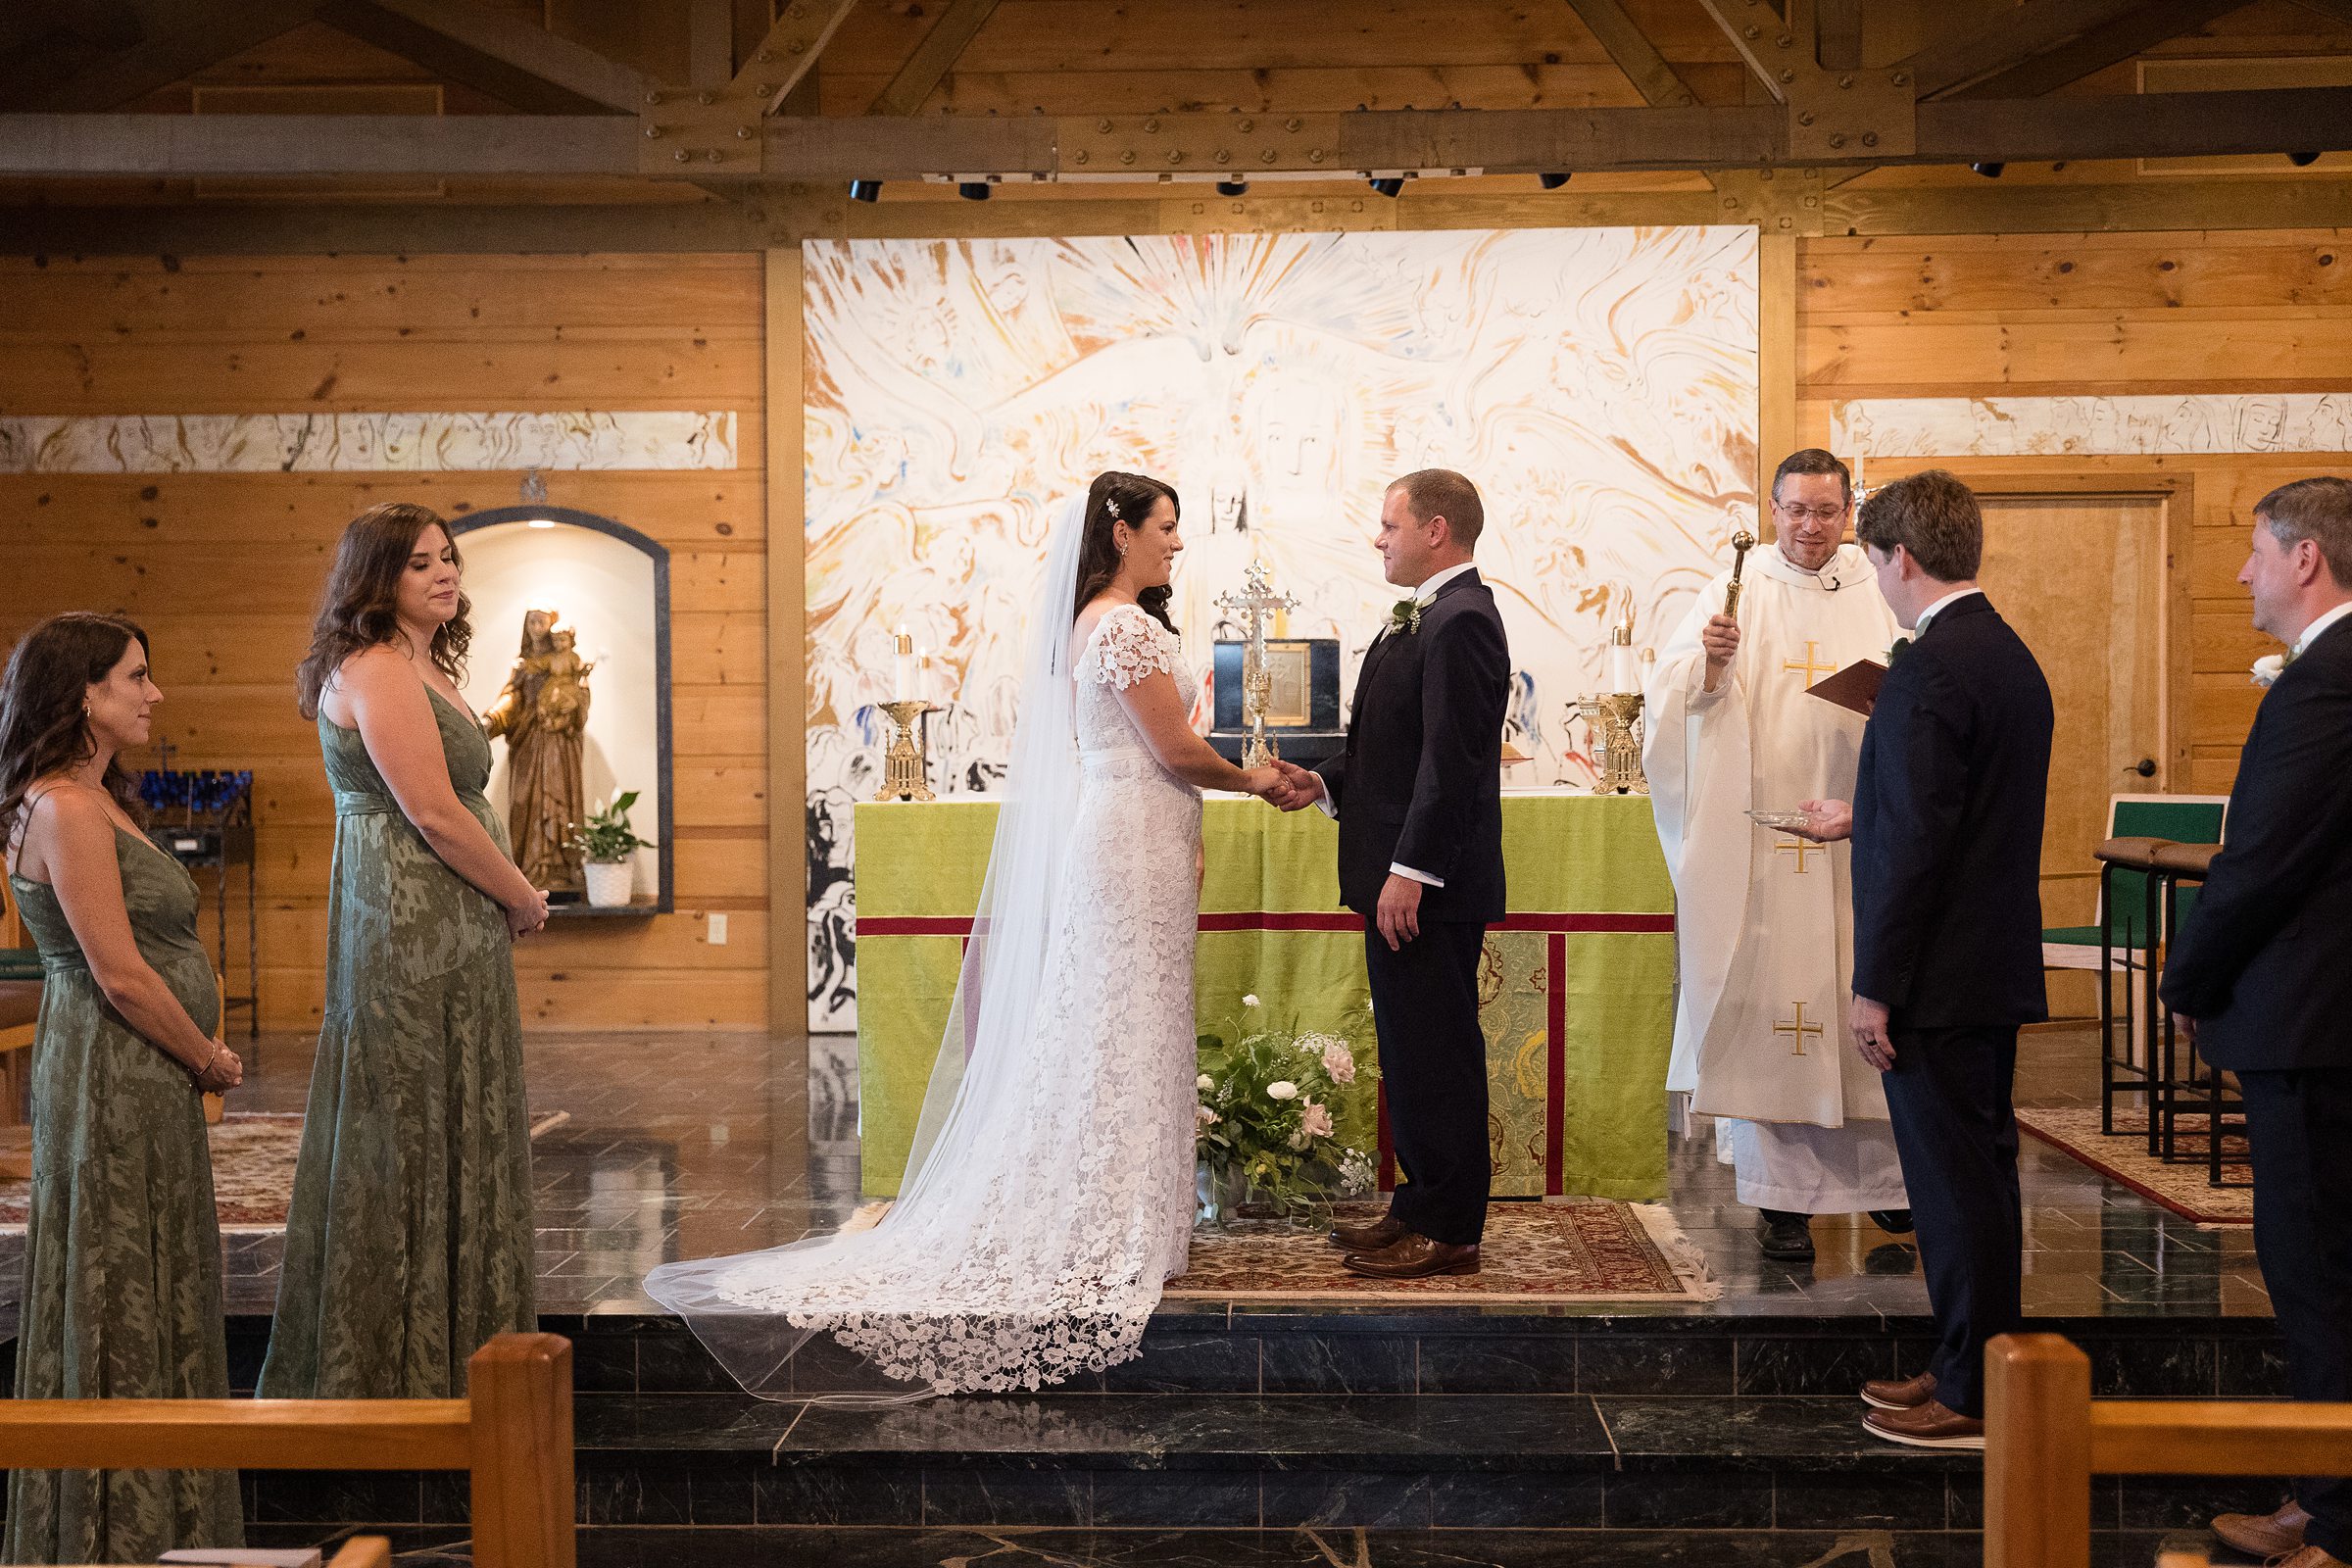 Catholic wedding ceremony in Stowe, VT